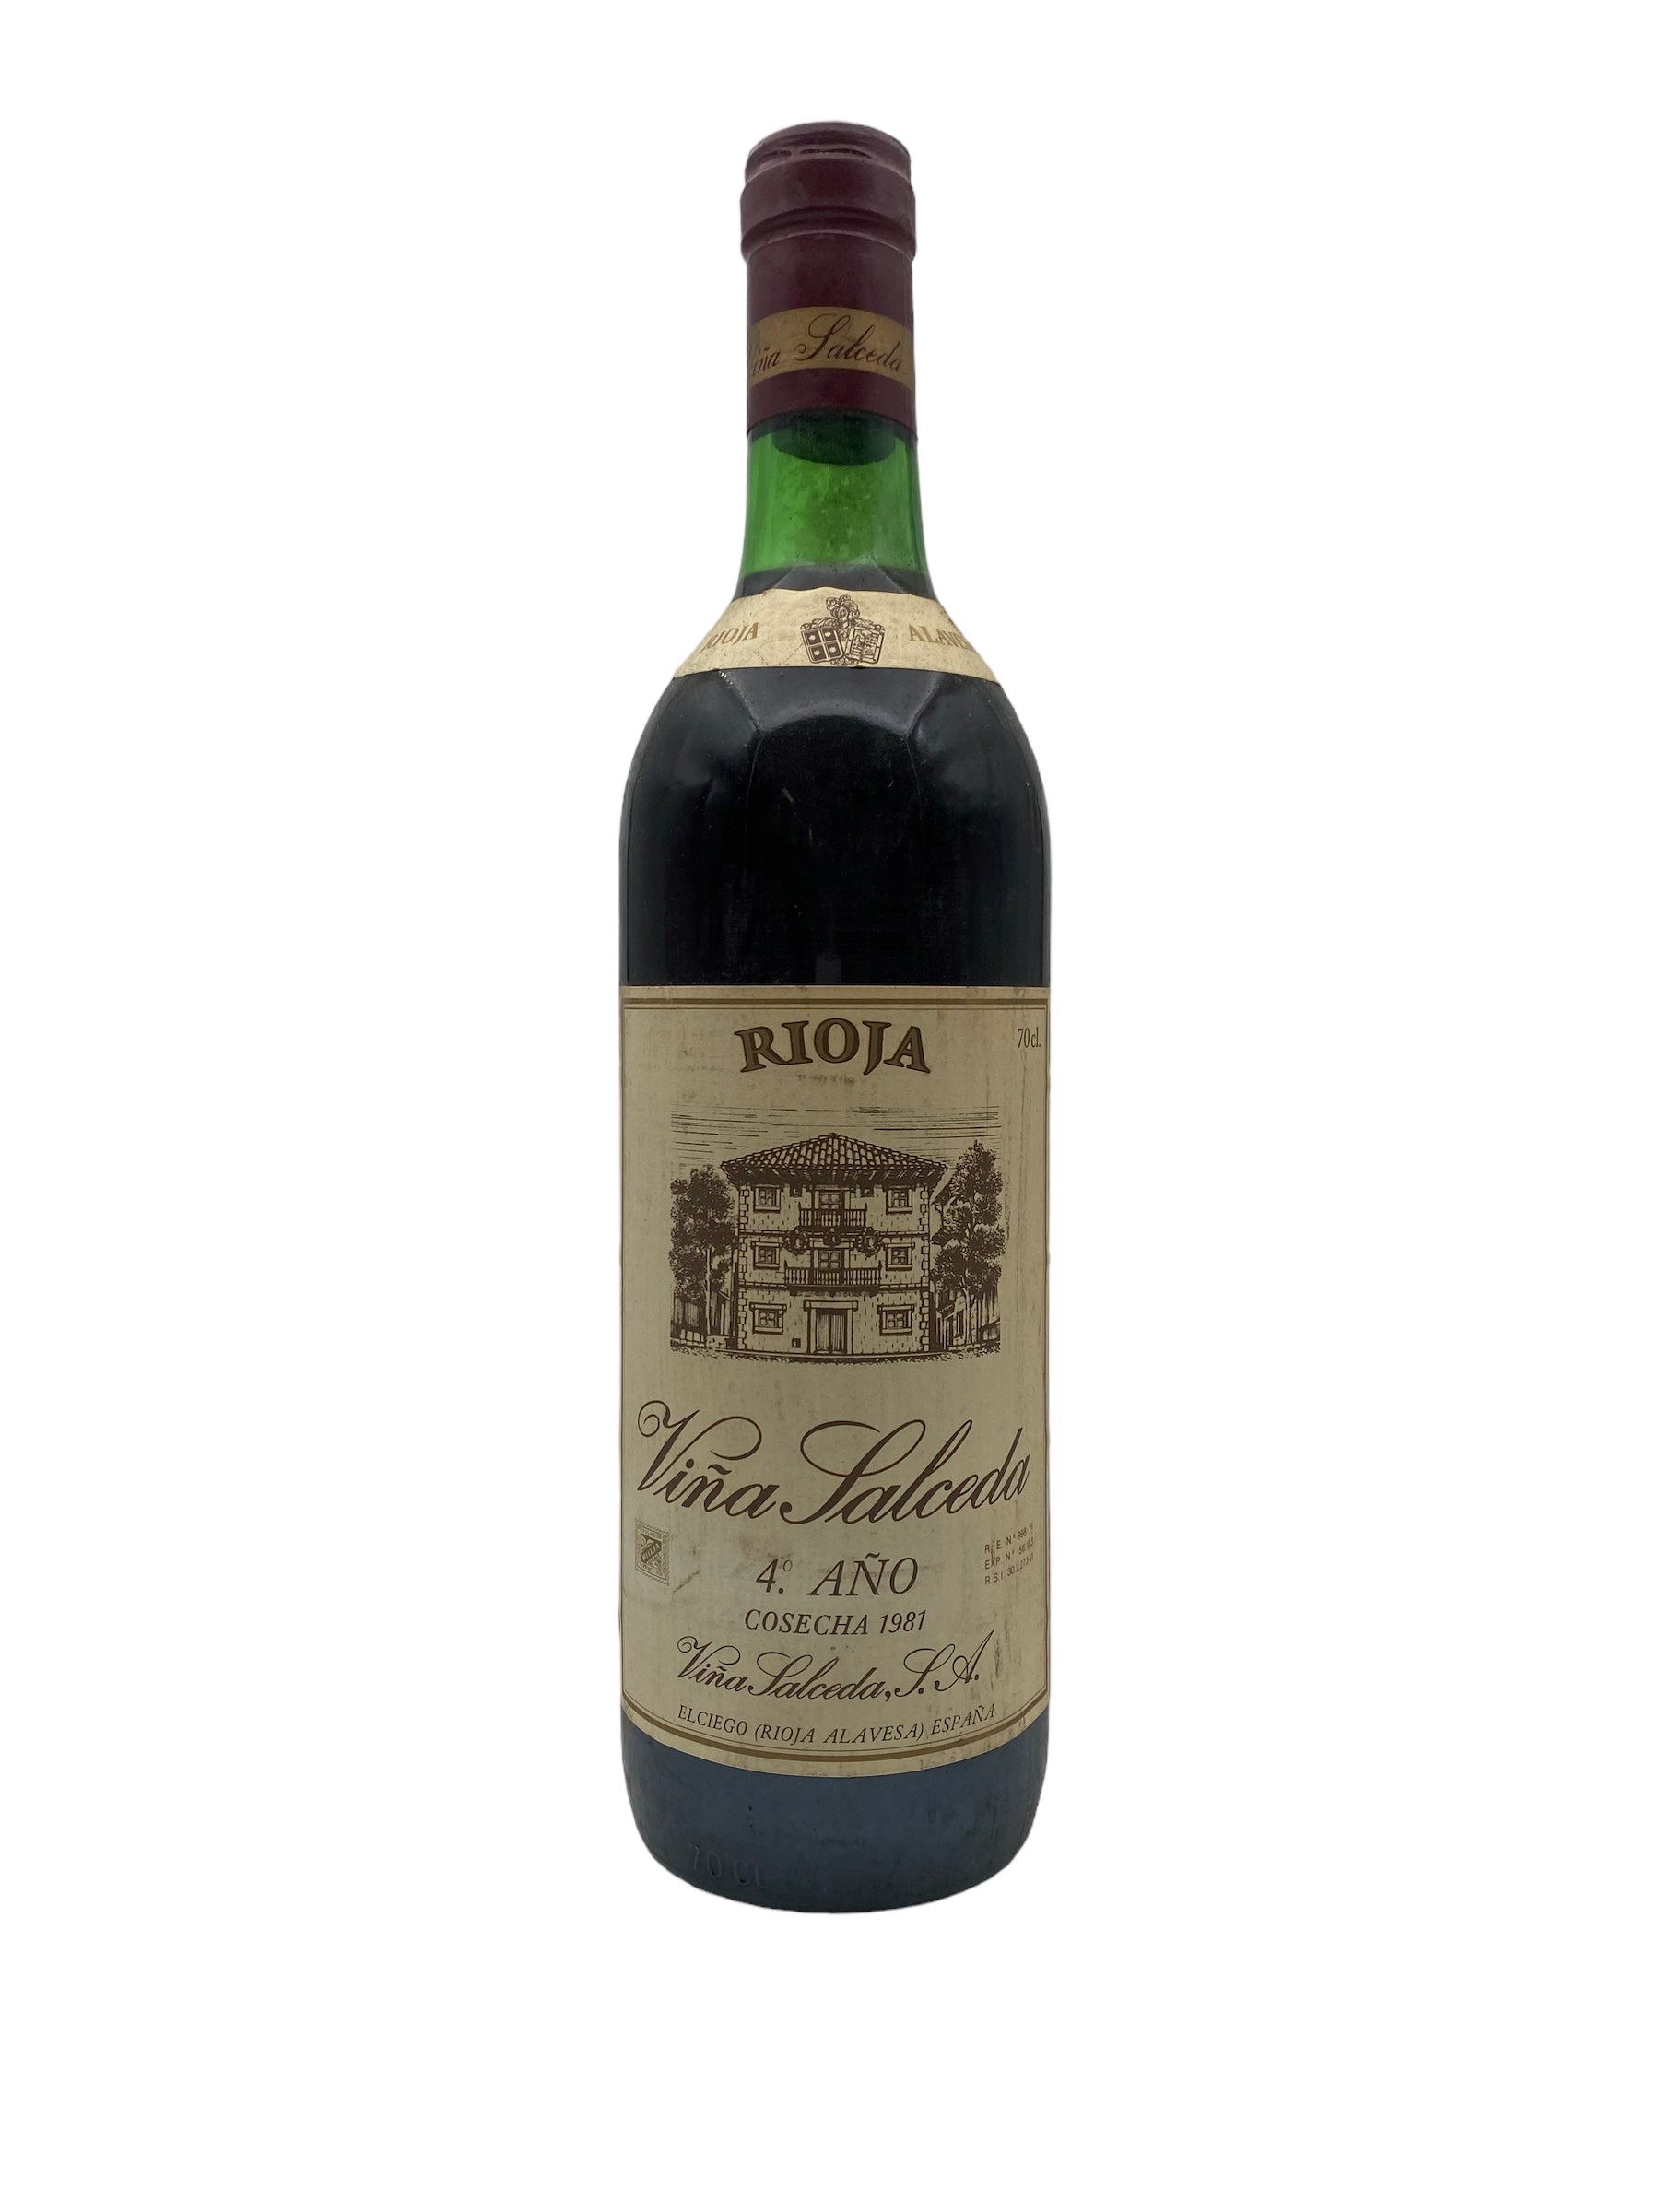 Se Rioja Viña Salceda 1981 hos Bottleswithhistory.dk